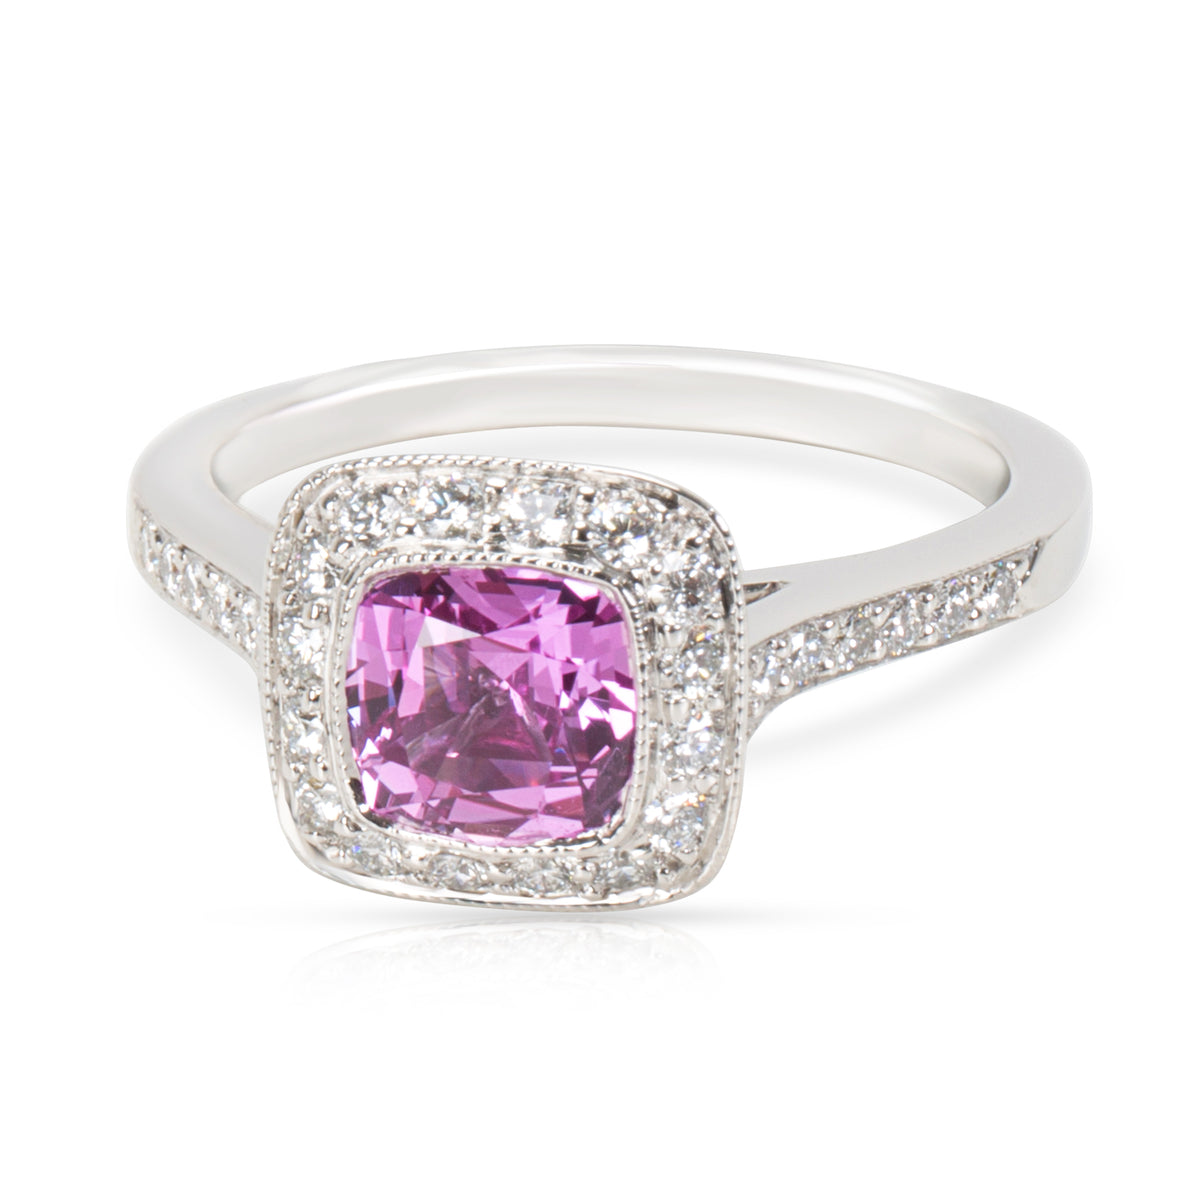 Tiffany & Co. Legacy Pink Sapphire & Diamond Ring in Platinum